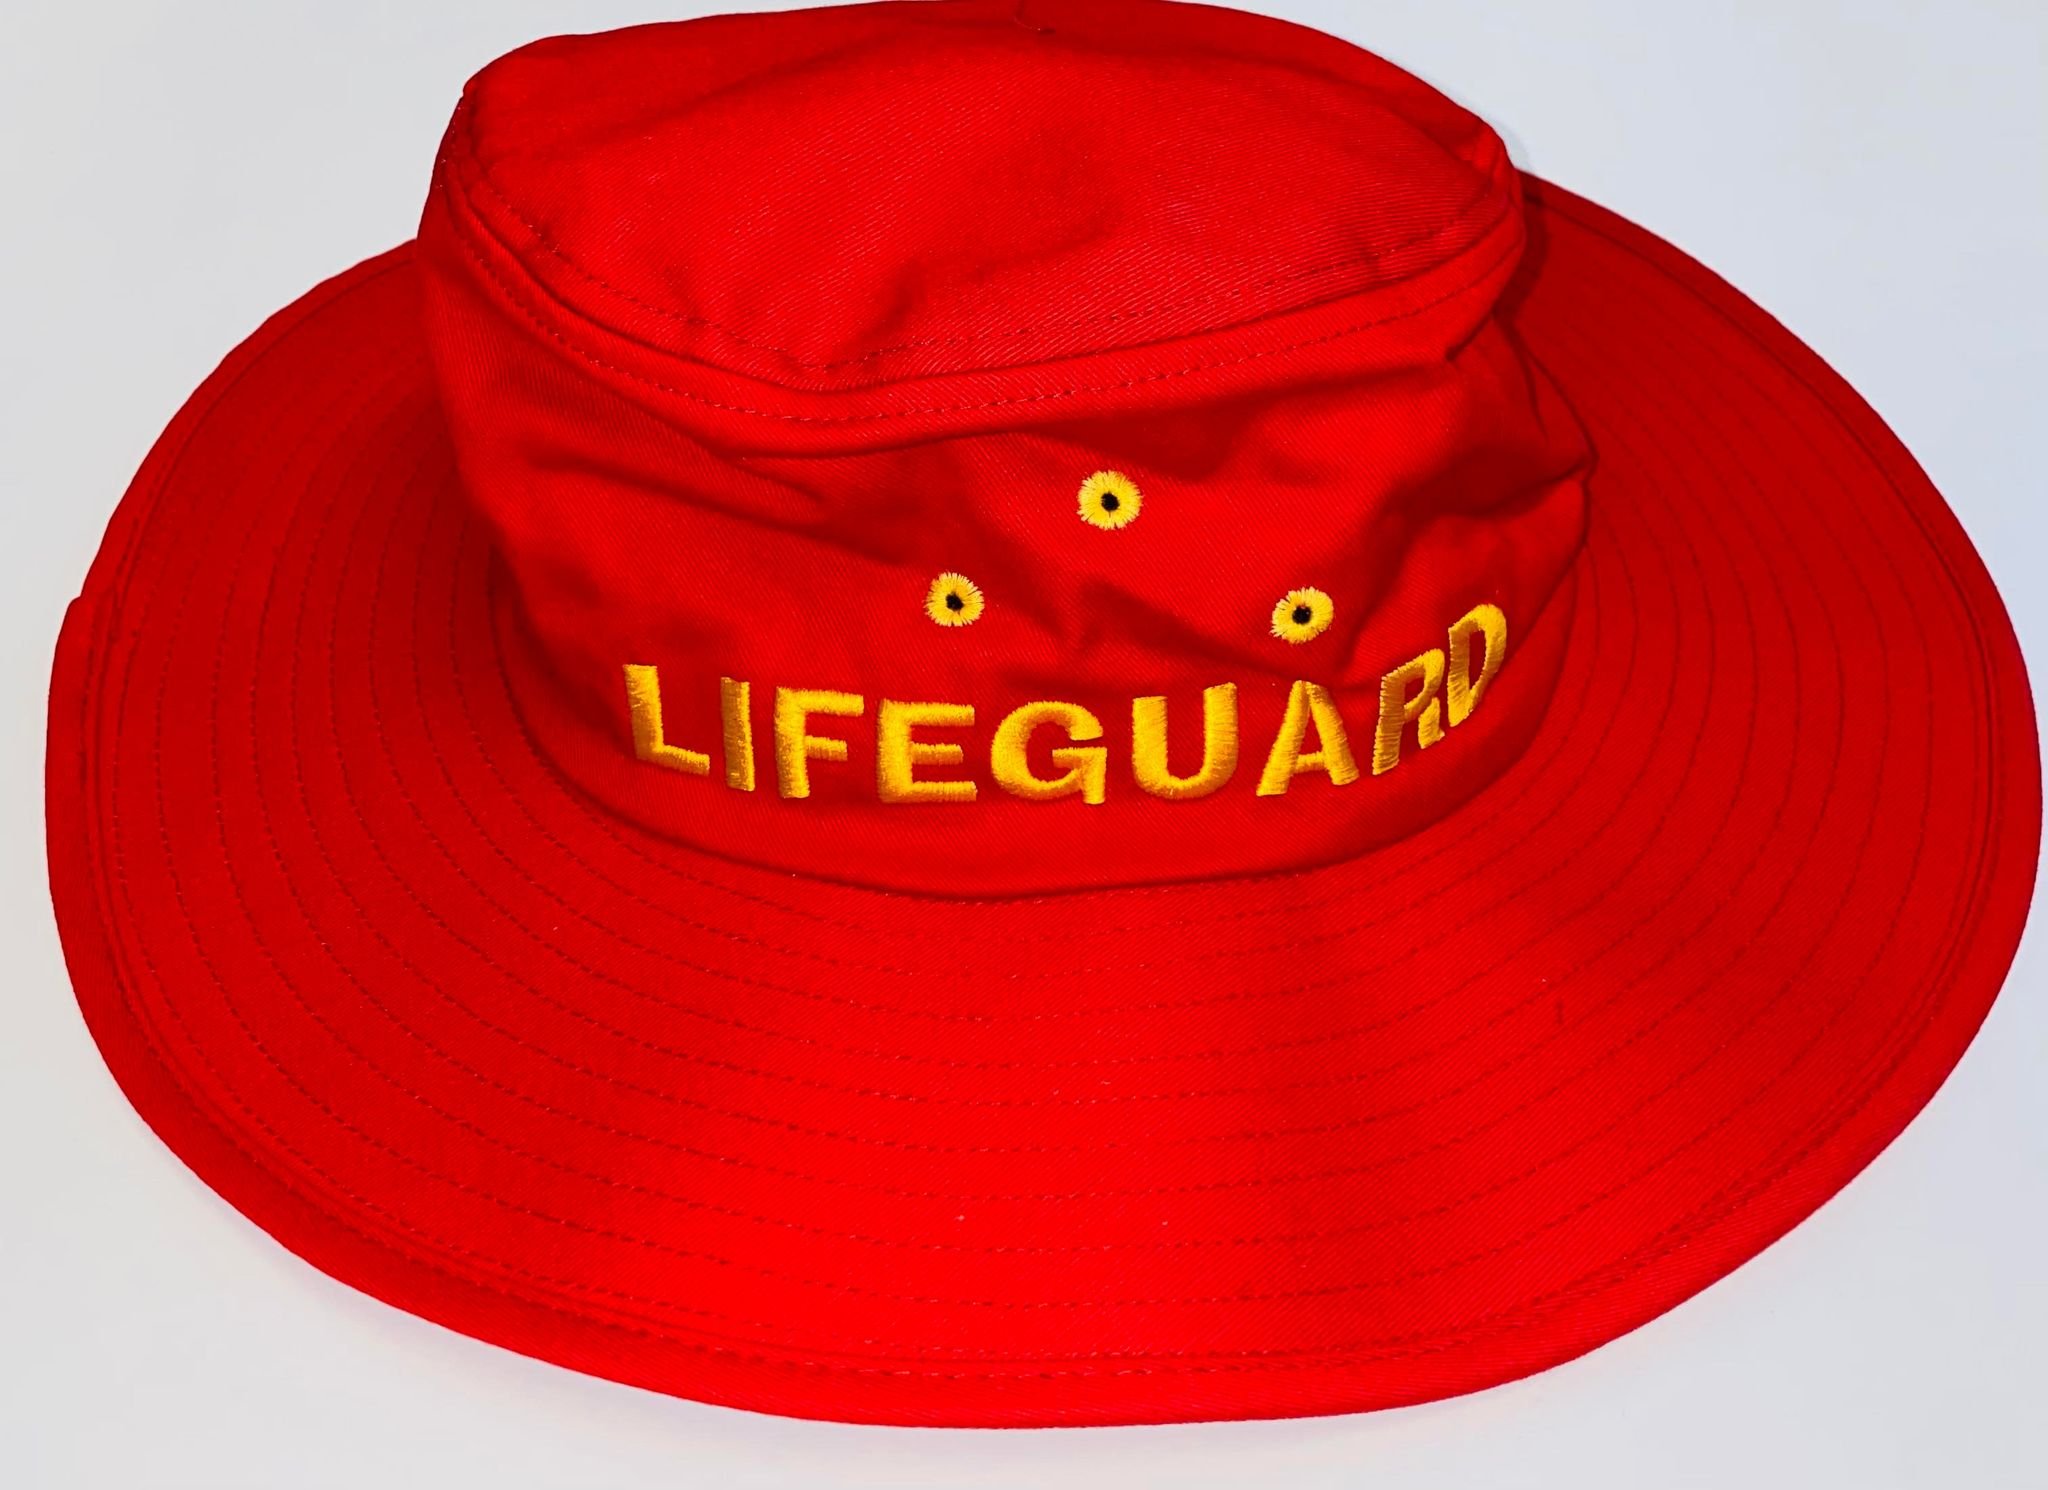 Lifeguard - Hats - $20.00